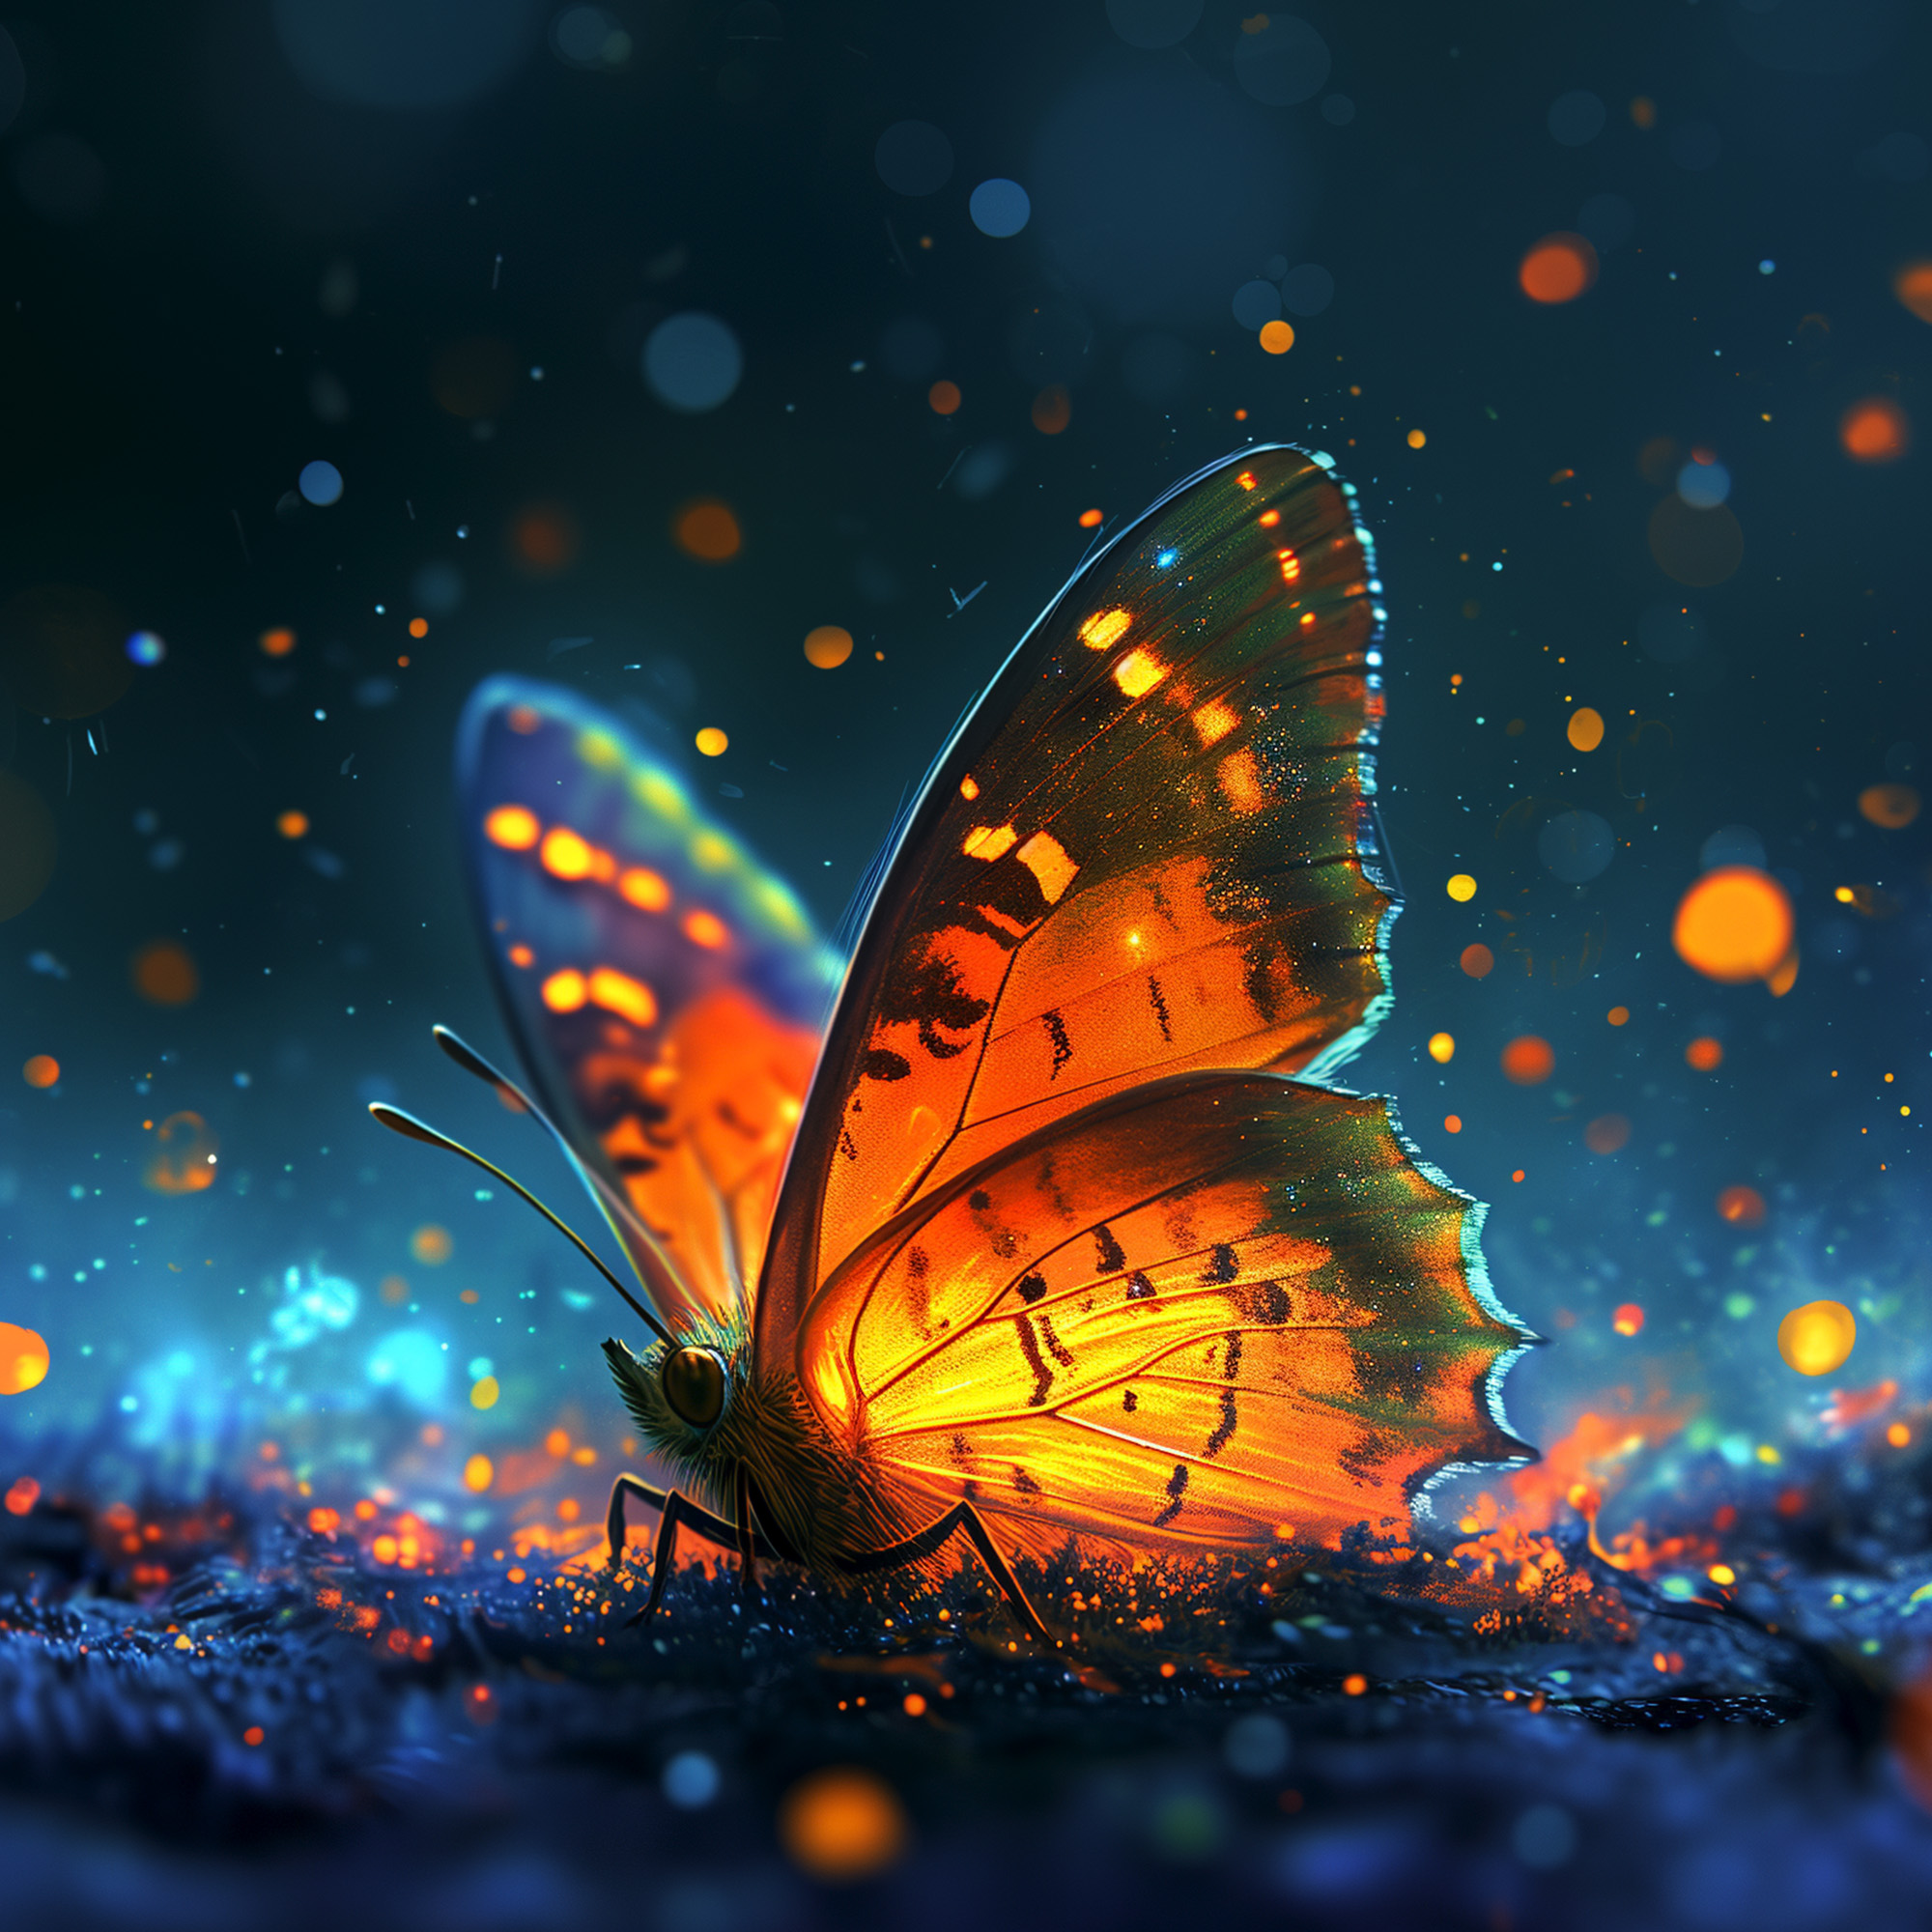 ai-images-slide-_0002_dblumx_a_new_born_butterfly_colorful_joyful_happy_by_Atey_Ghail_da80410a-4317-4d7a-8bec-0885f601cb